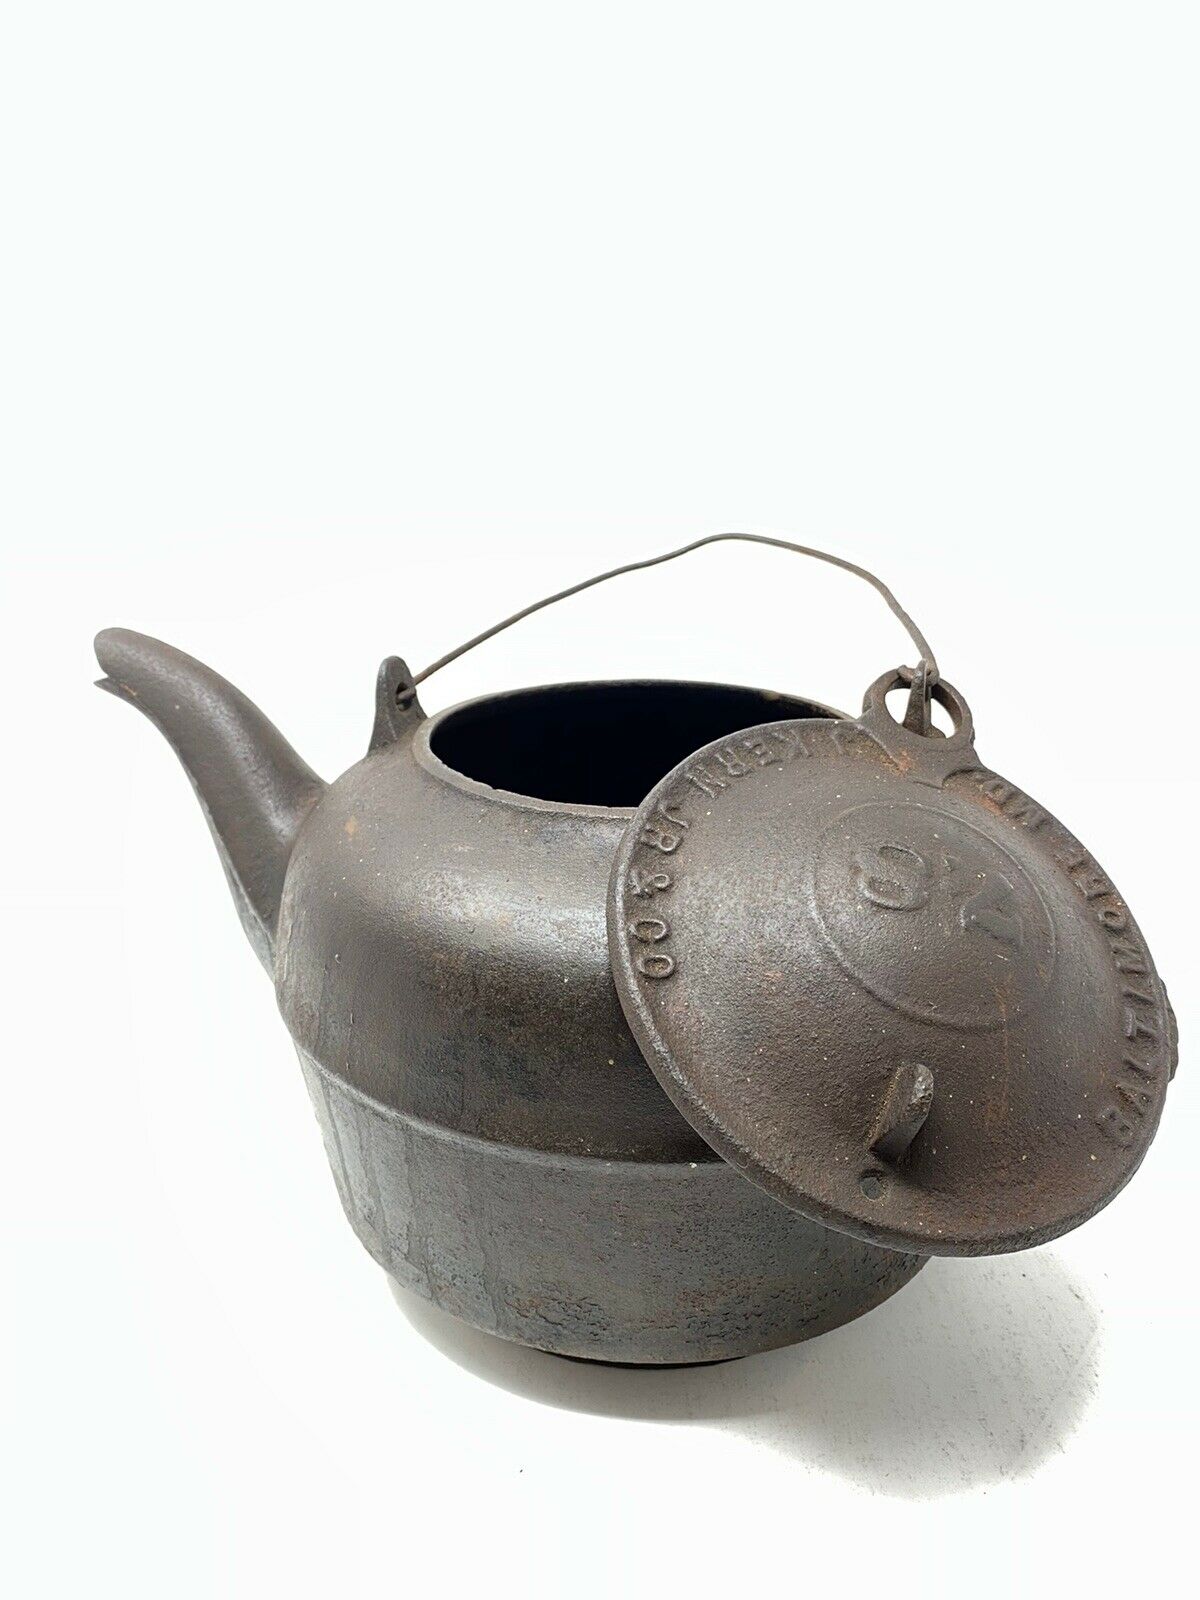 J. Kern Jr. Baltimore, MD RARE #7:8 Antique Cast Iron Tea Kettle